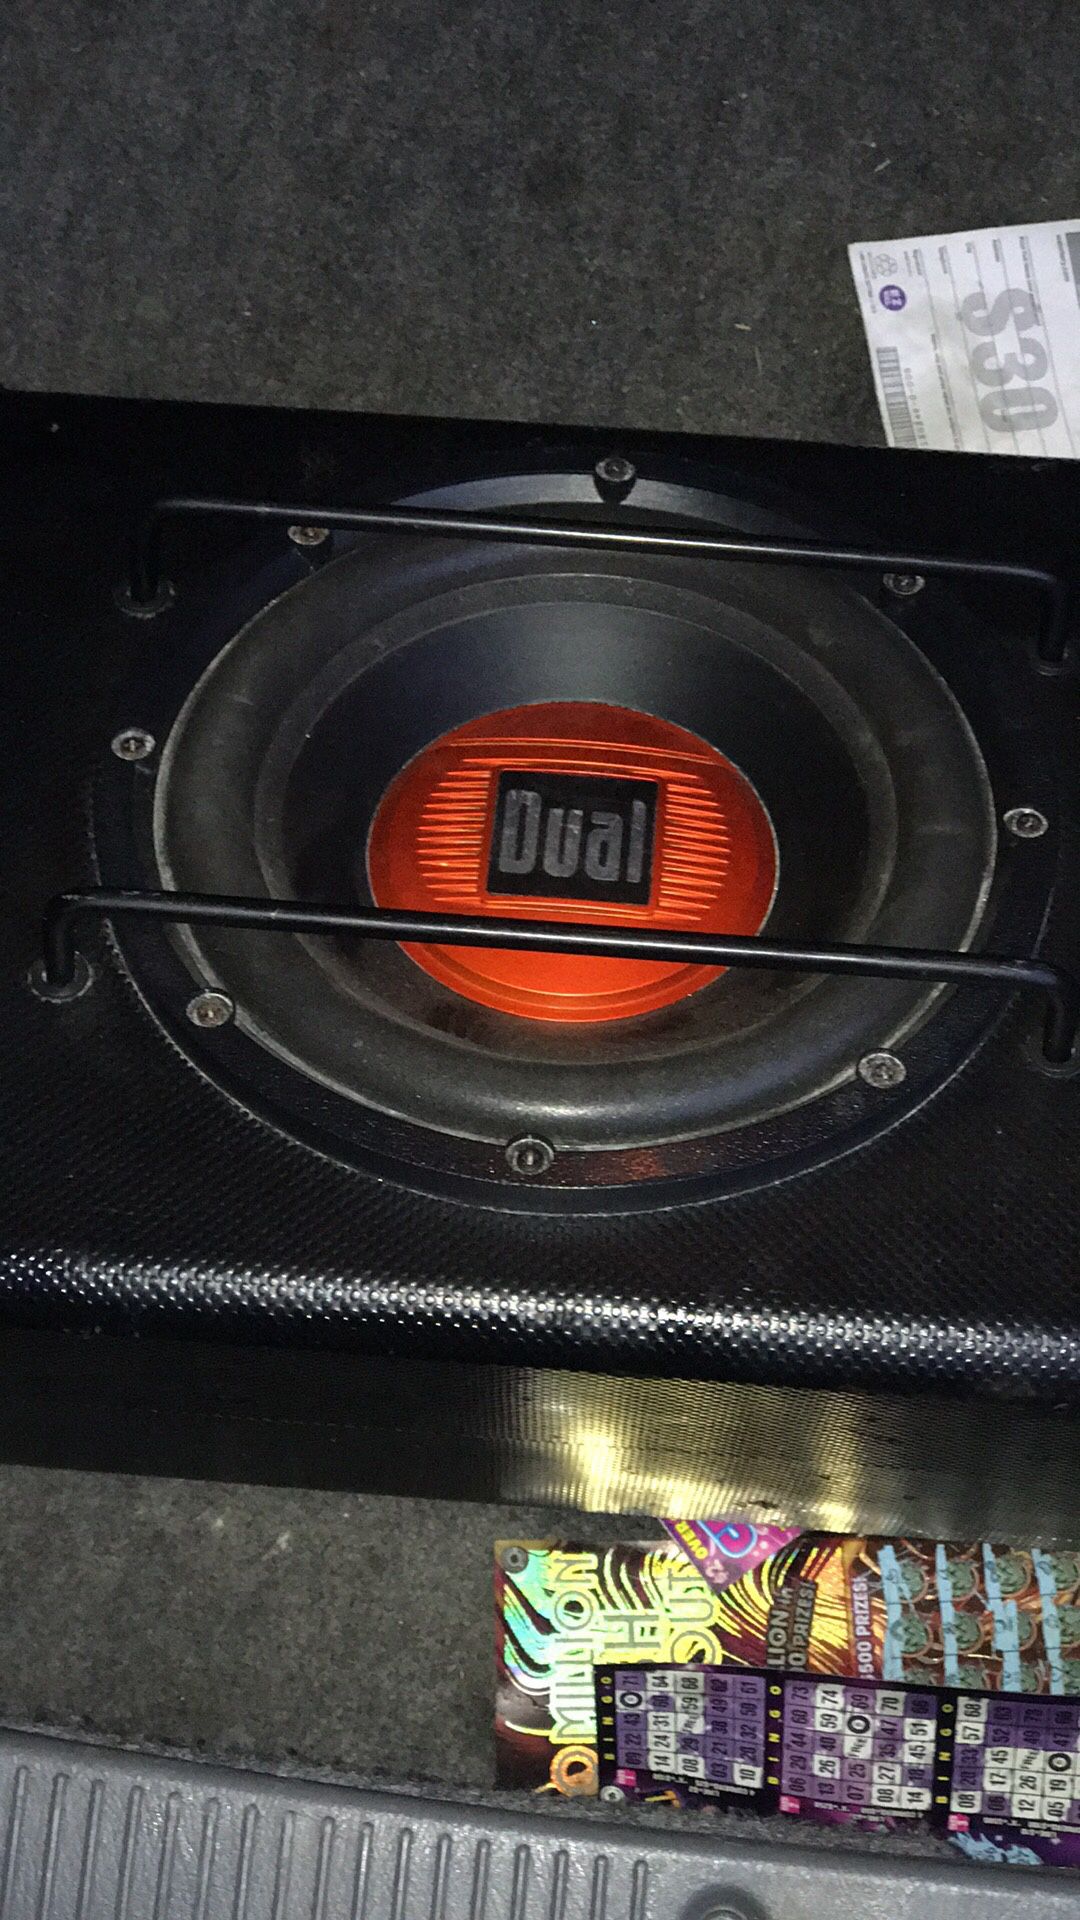 Dual model alb10 300 watt subwoofer